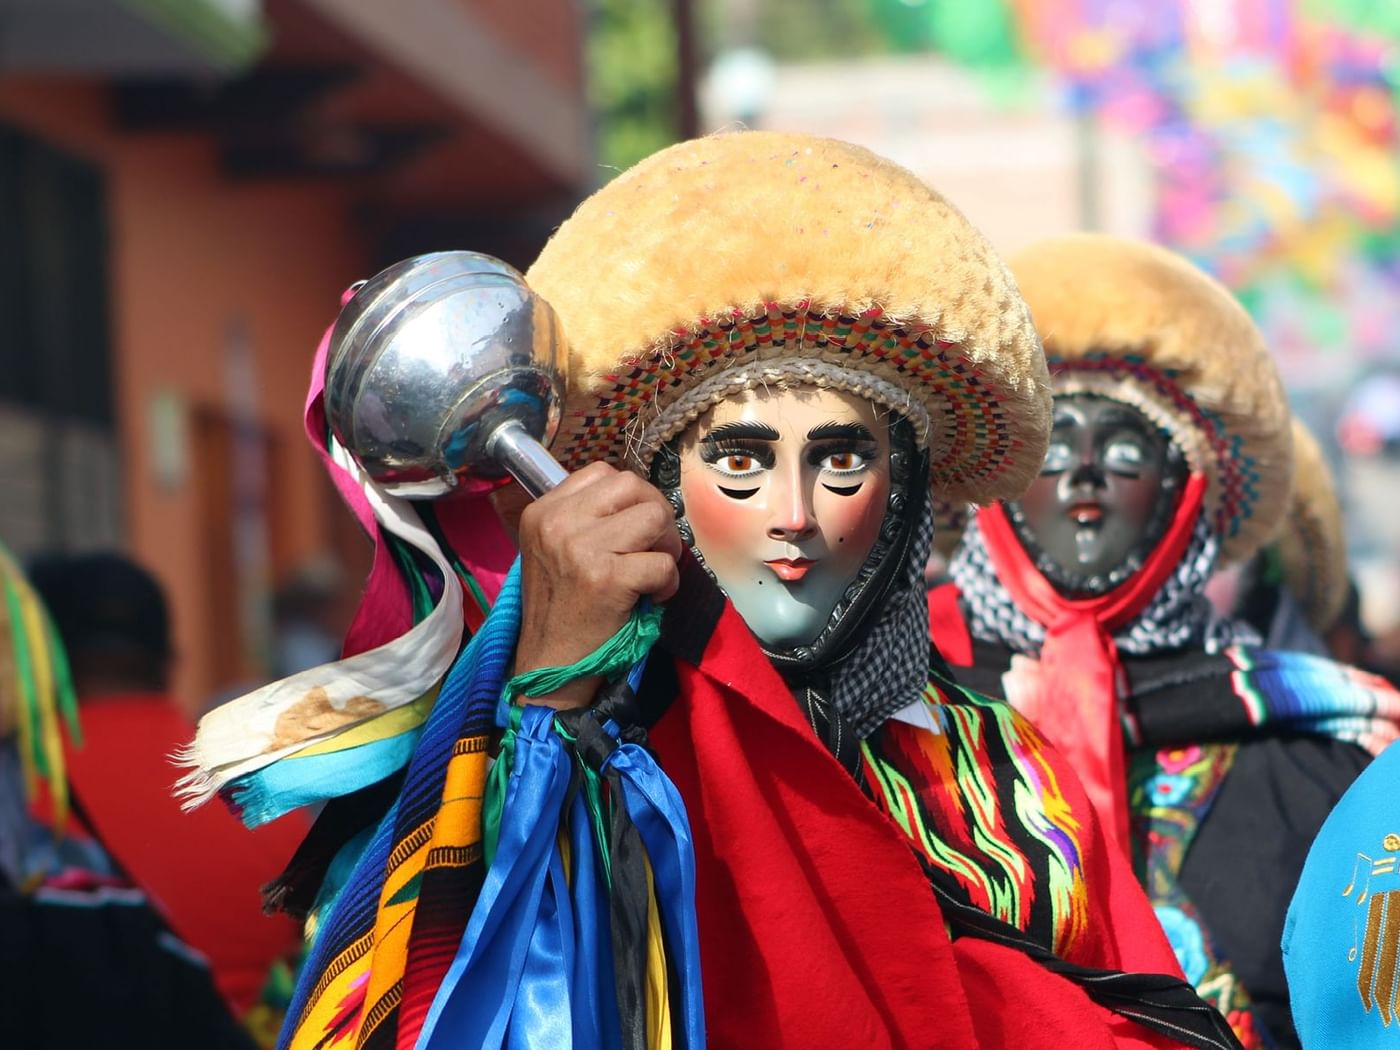 Cultural festival held at Fiesta Americana Hotels